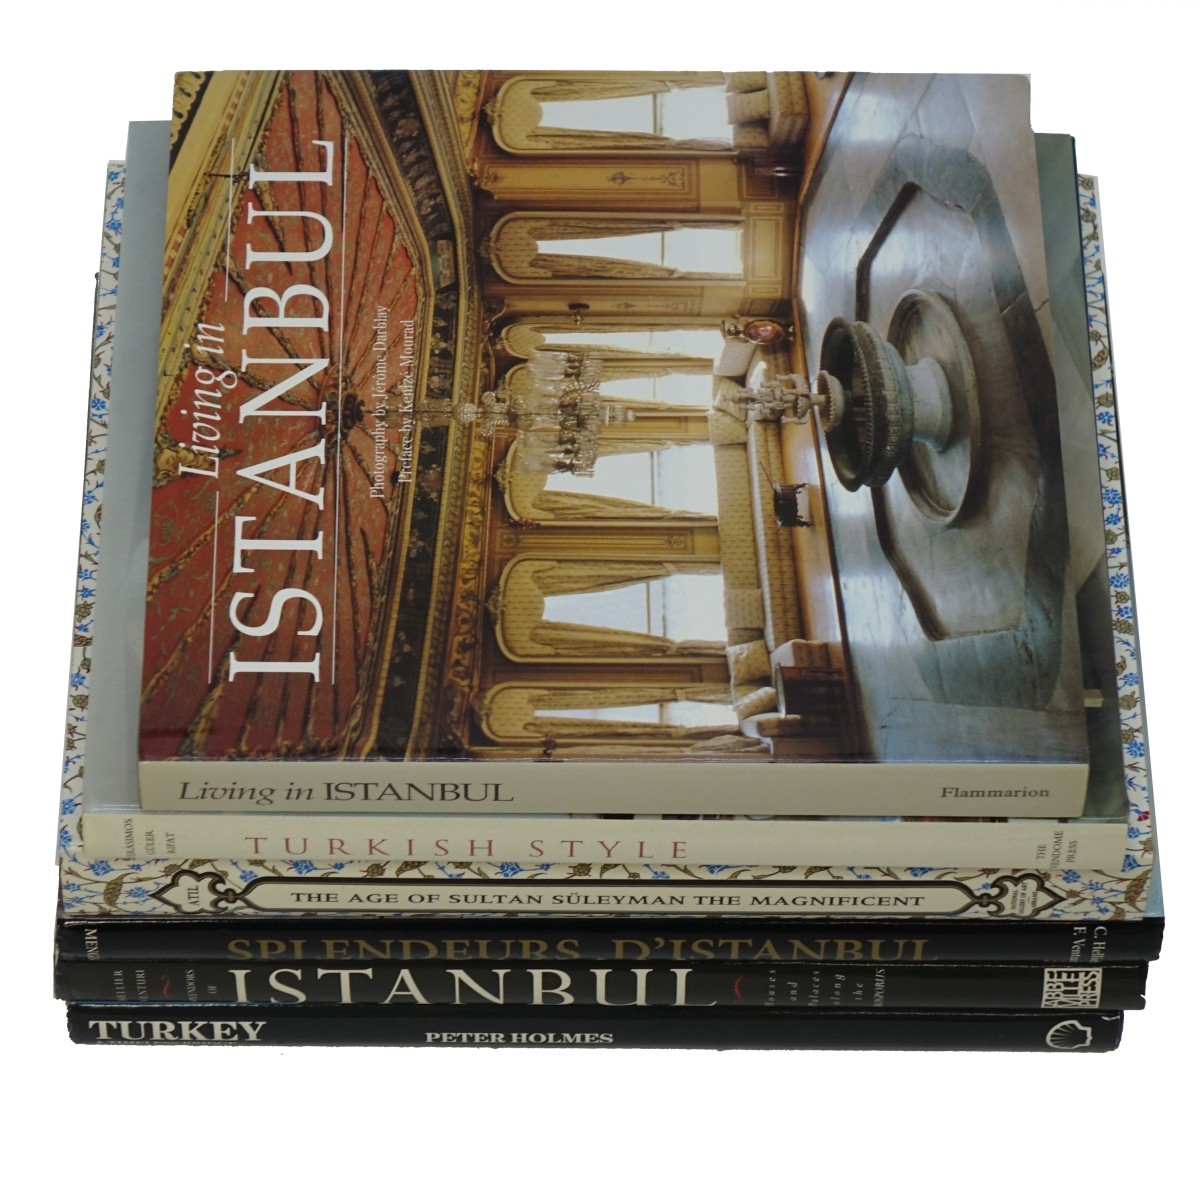 Six Volumes on Turkish Art and Design